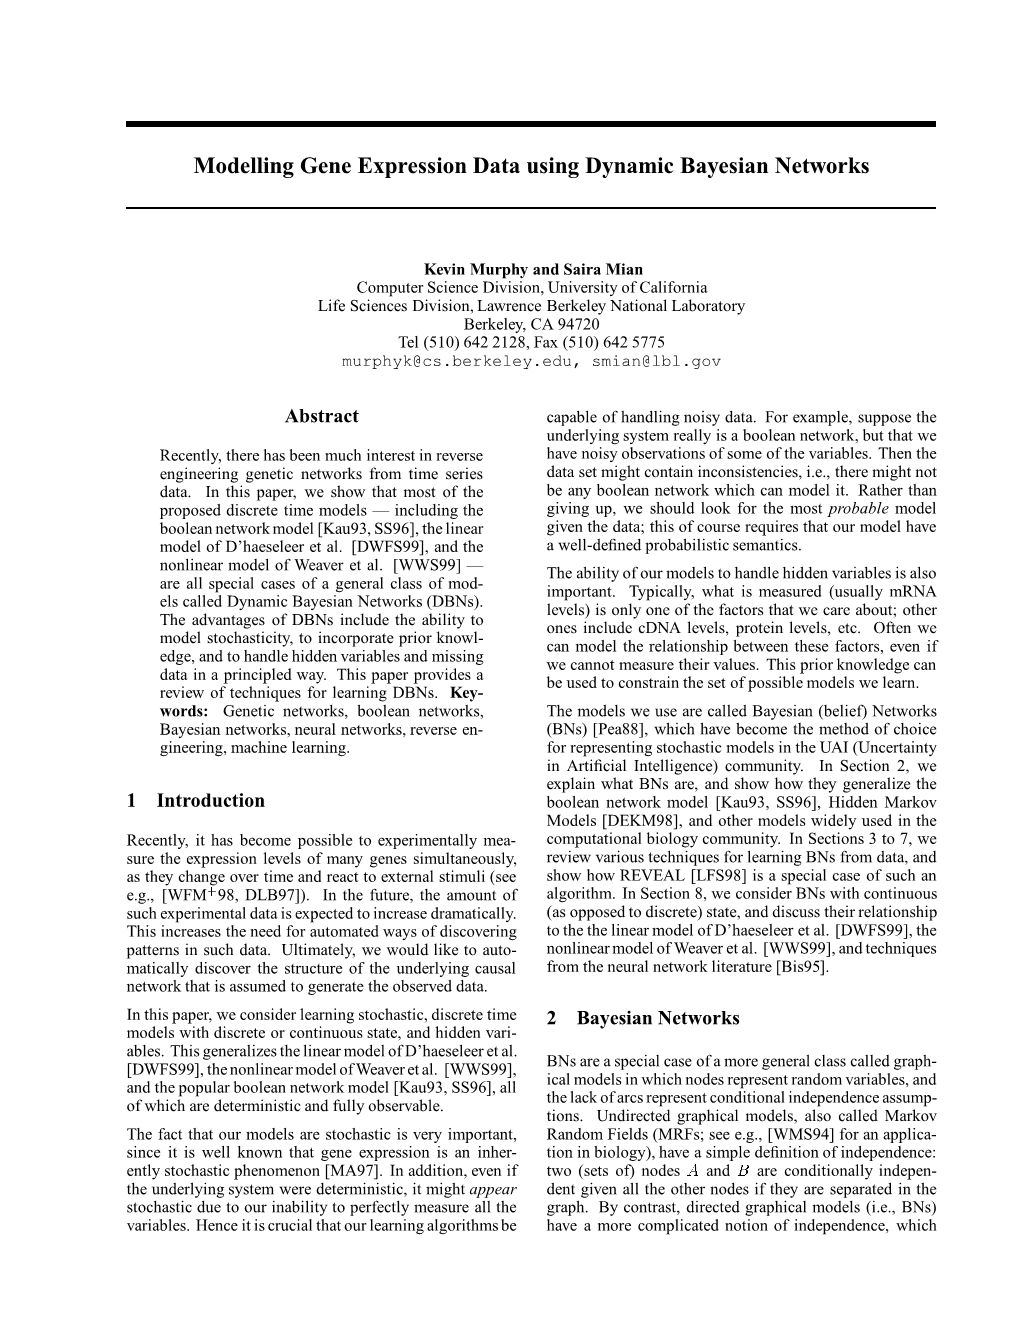 Modelling Gene Expression Data Using Dynamic Bayesian Networks